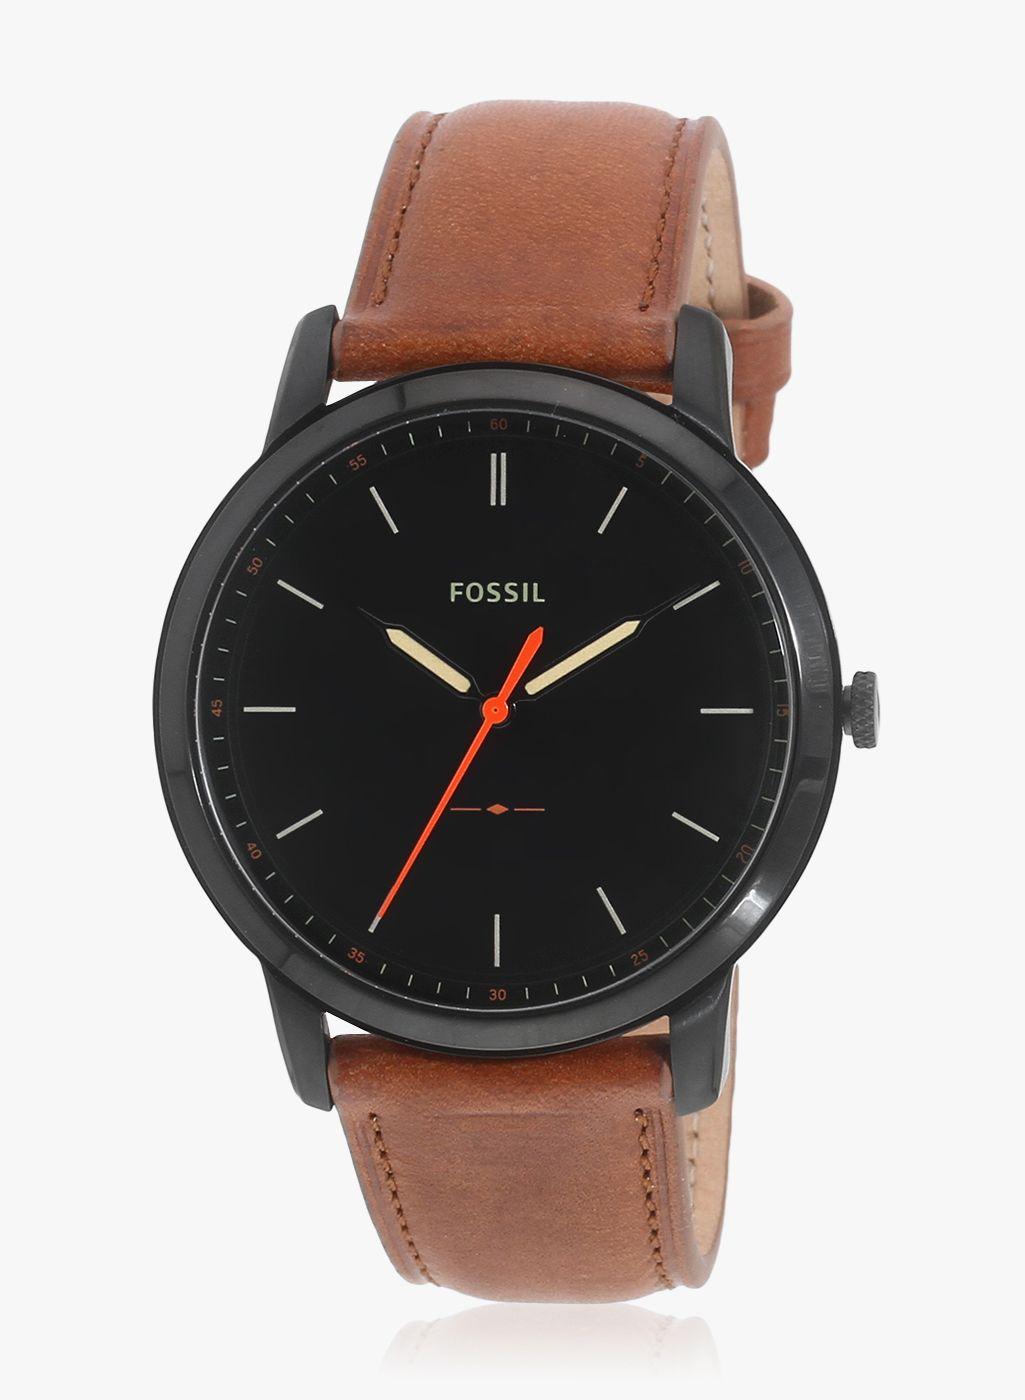 the minima fs5305 tan/black analog watch